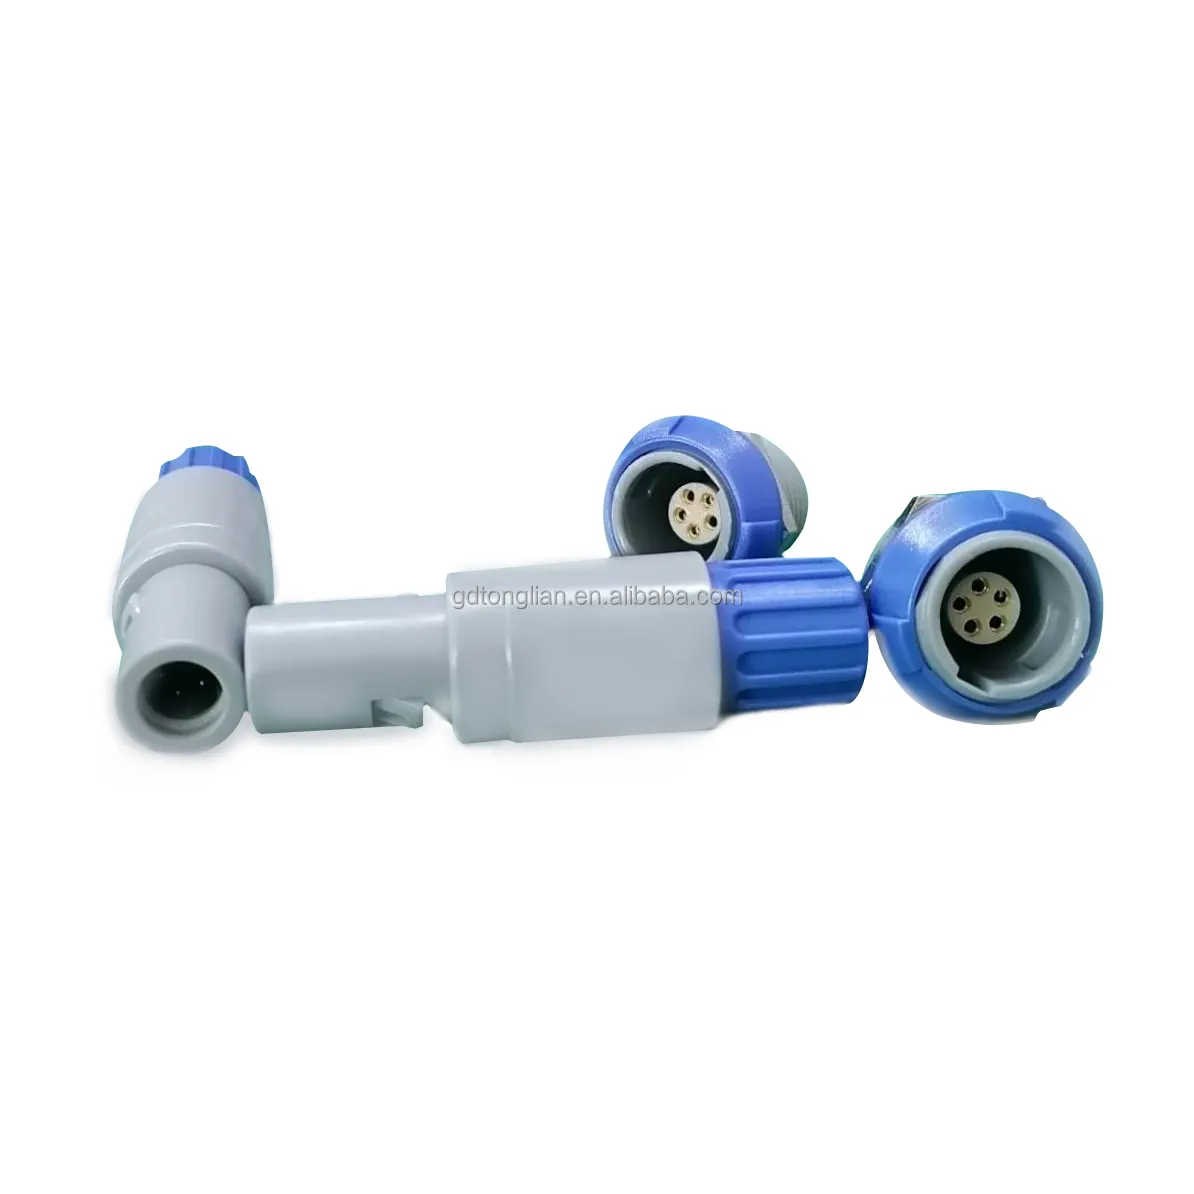 Aangepaste Medische Apparatuur Plastic Push-Pull 5-Pins Waterdichte Connector 1P-Serie Blauwe Cirkelvormige Pag Rechte Plug